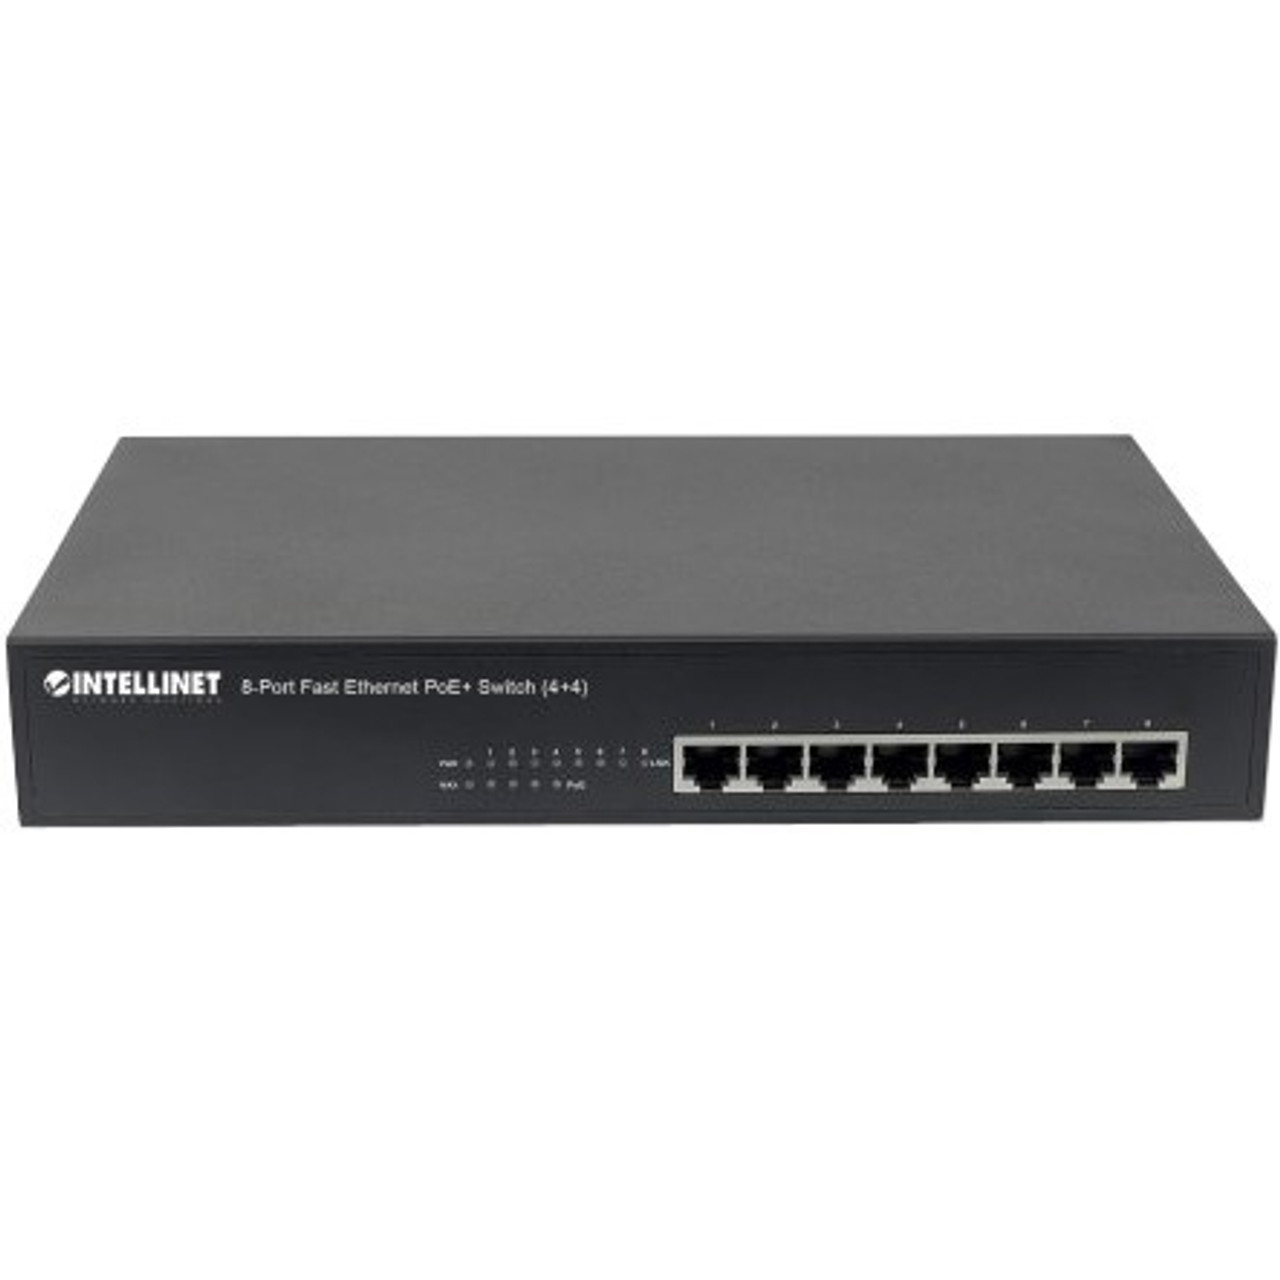 561075 Intellinet Network 8-Ports Fast Ethernet PoE+ Switch (Refurbished)